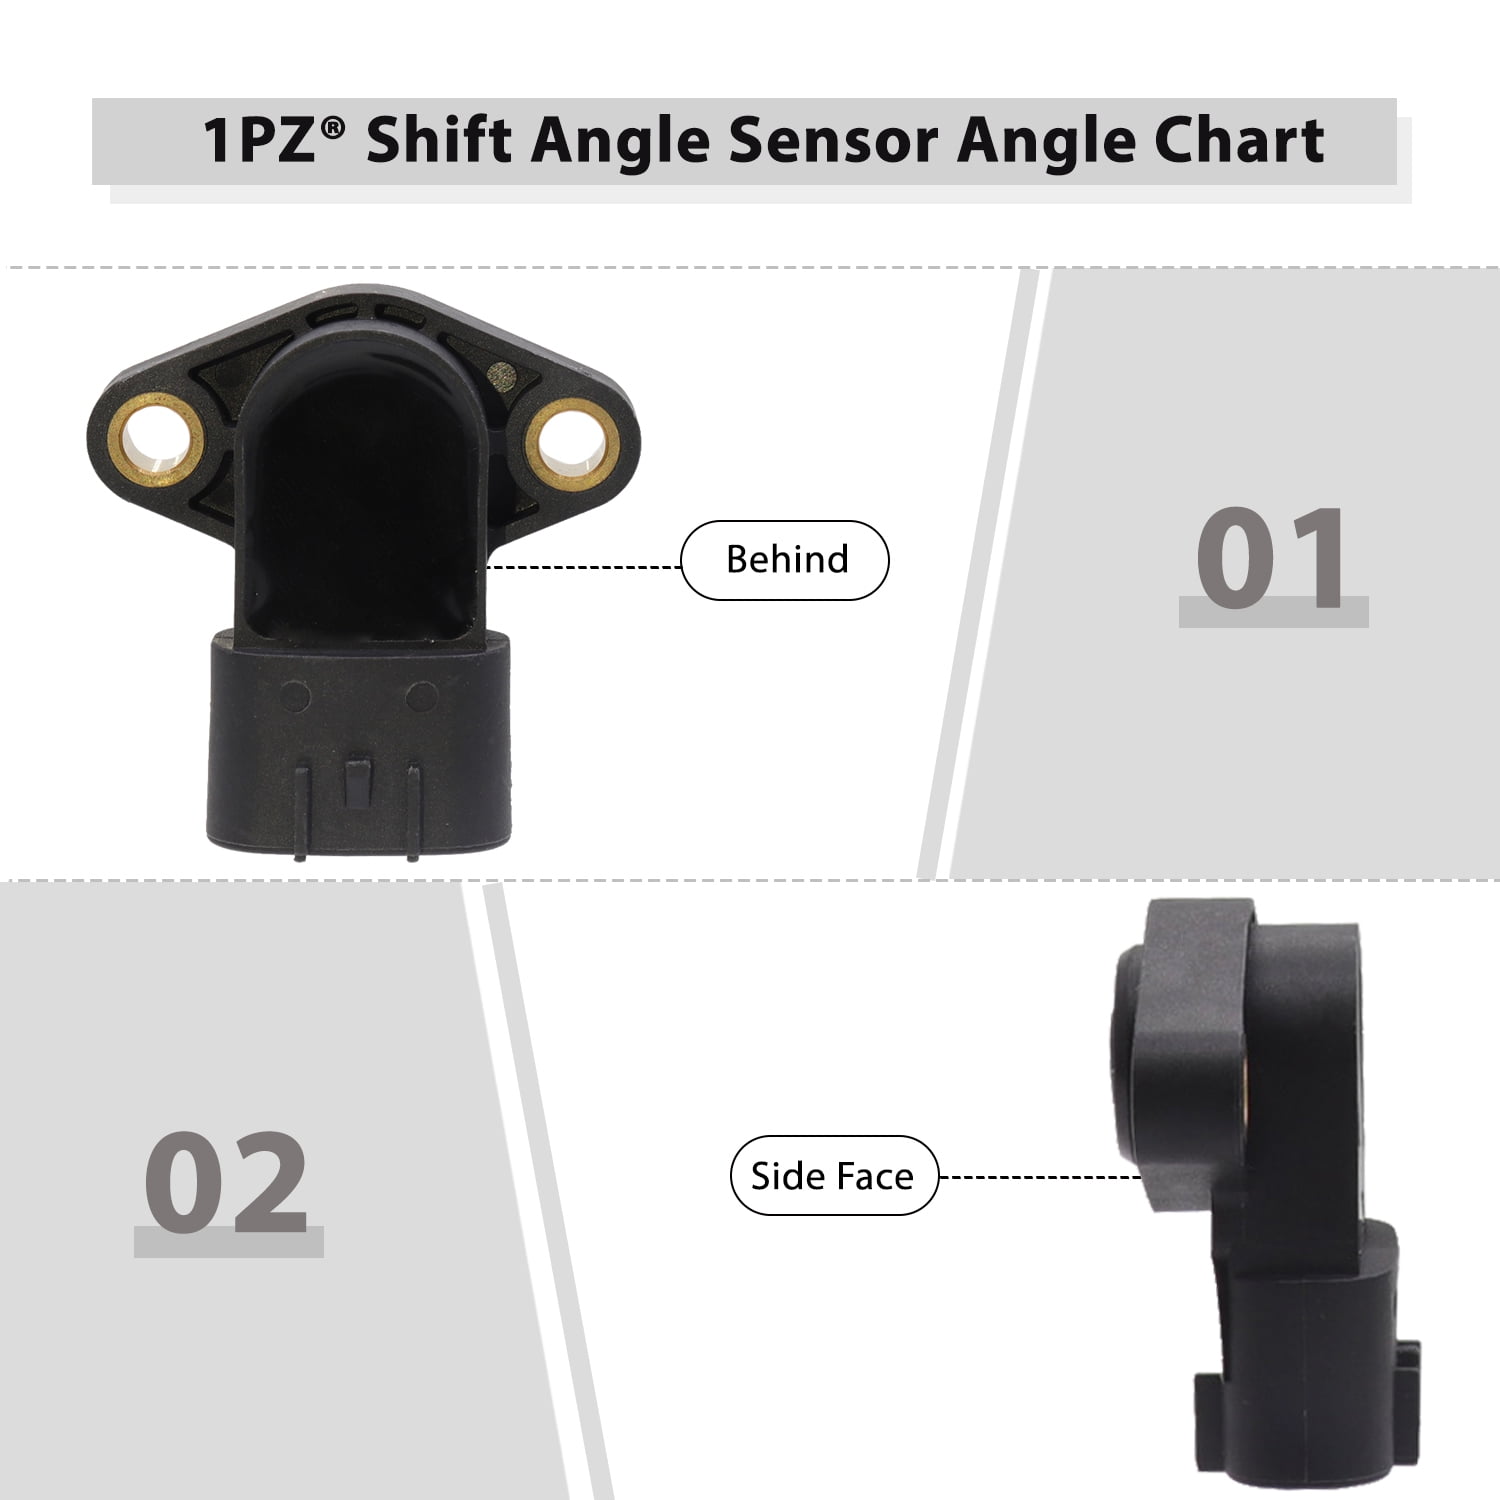 1PZ T35-SA1 Shift Angle Sensor for Honda Recon Rancher Foreman SXS500M2 SXS1000M5D TRX250 TRX350 TRX420 TRX500 Pioneer 500 1000 2002-2019 38800-HP0-A11 38800-HR3-A21 